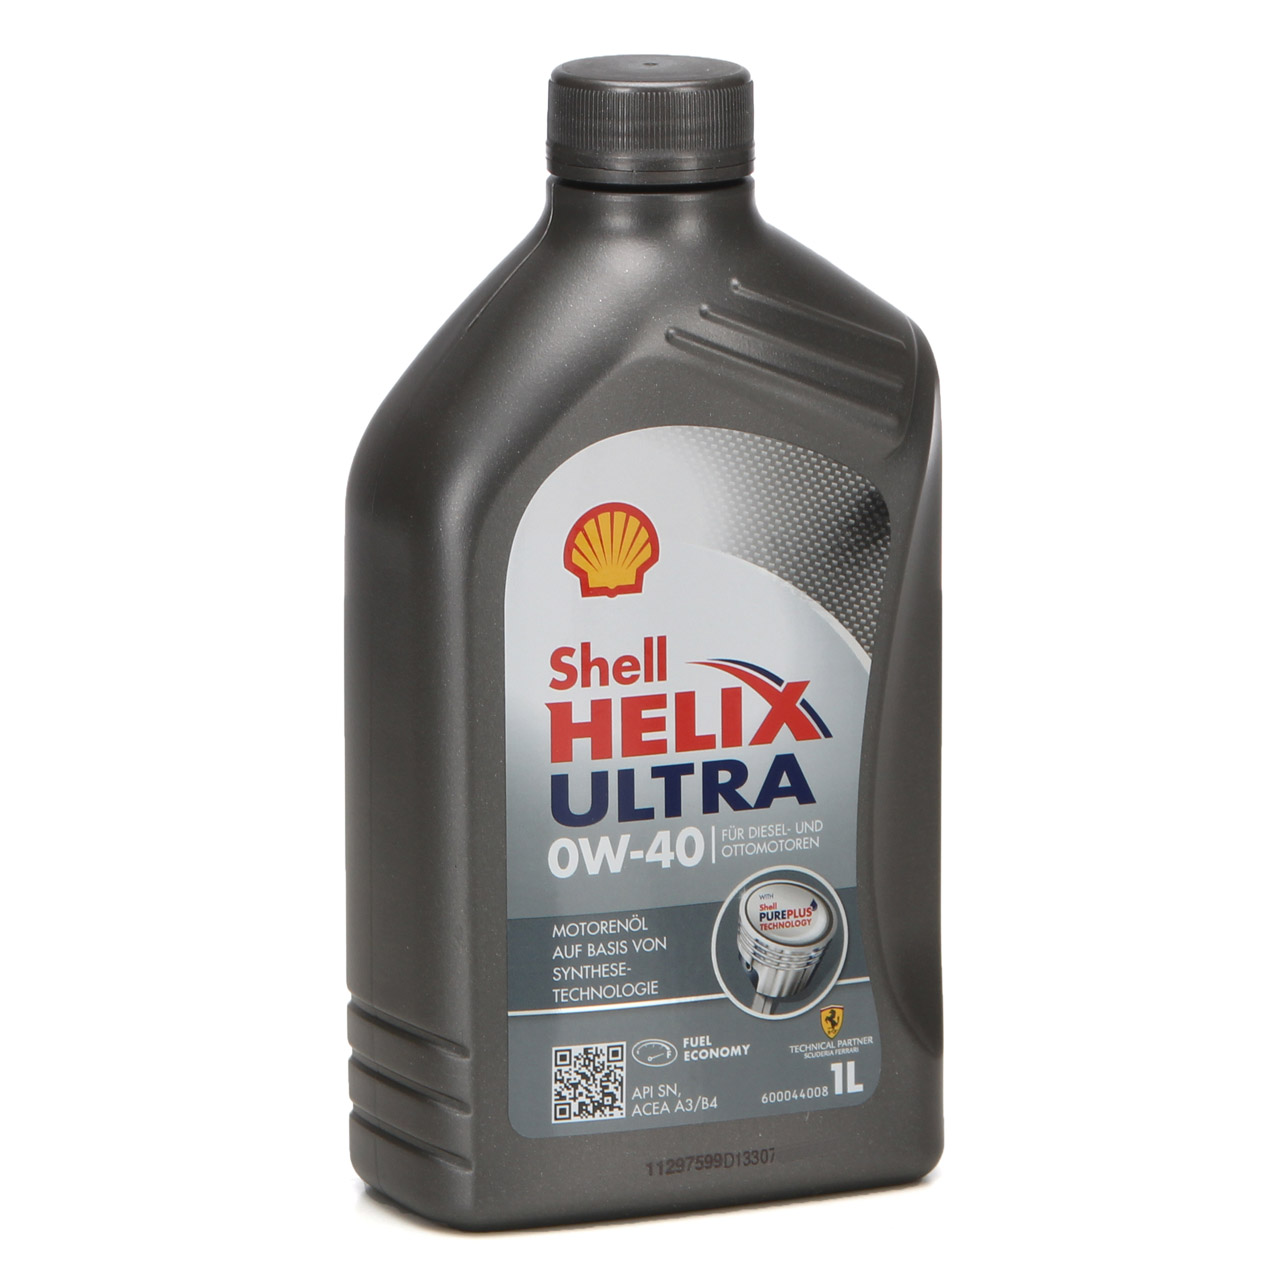 6x 1 Liter SHELL HELIX ULTRA 0W-40 Motoröl Öl MB 229.5/226.5 VW 502.00/505.00